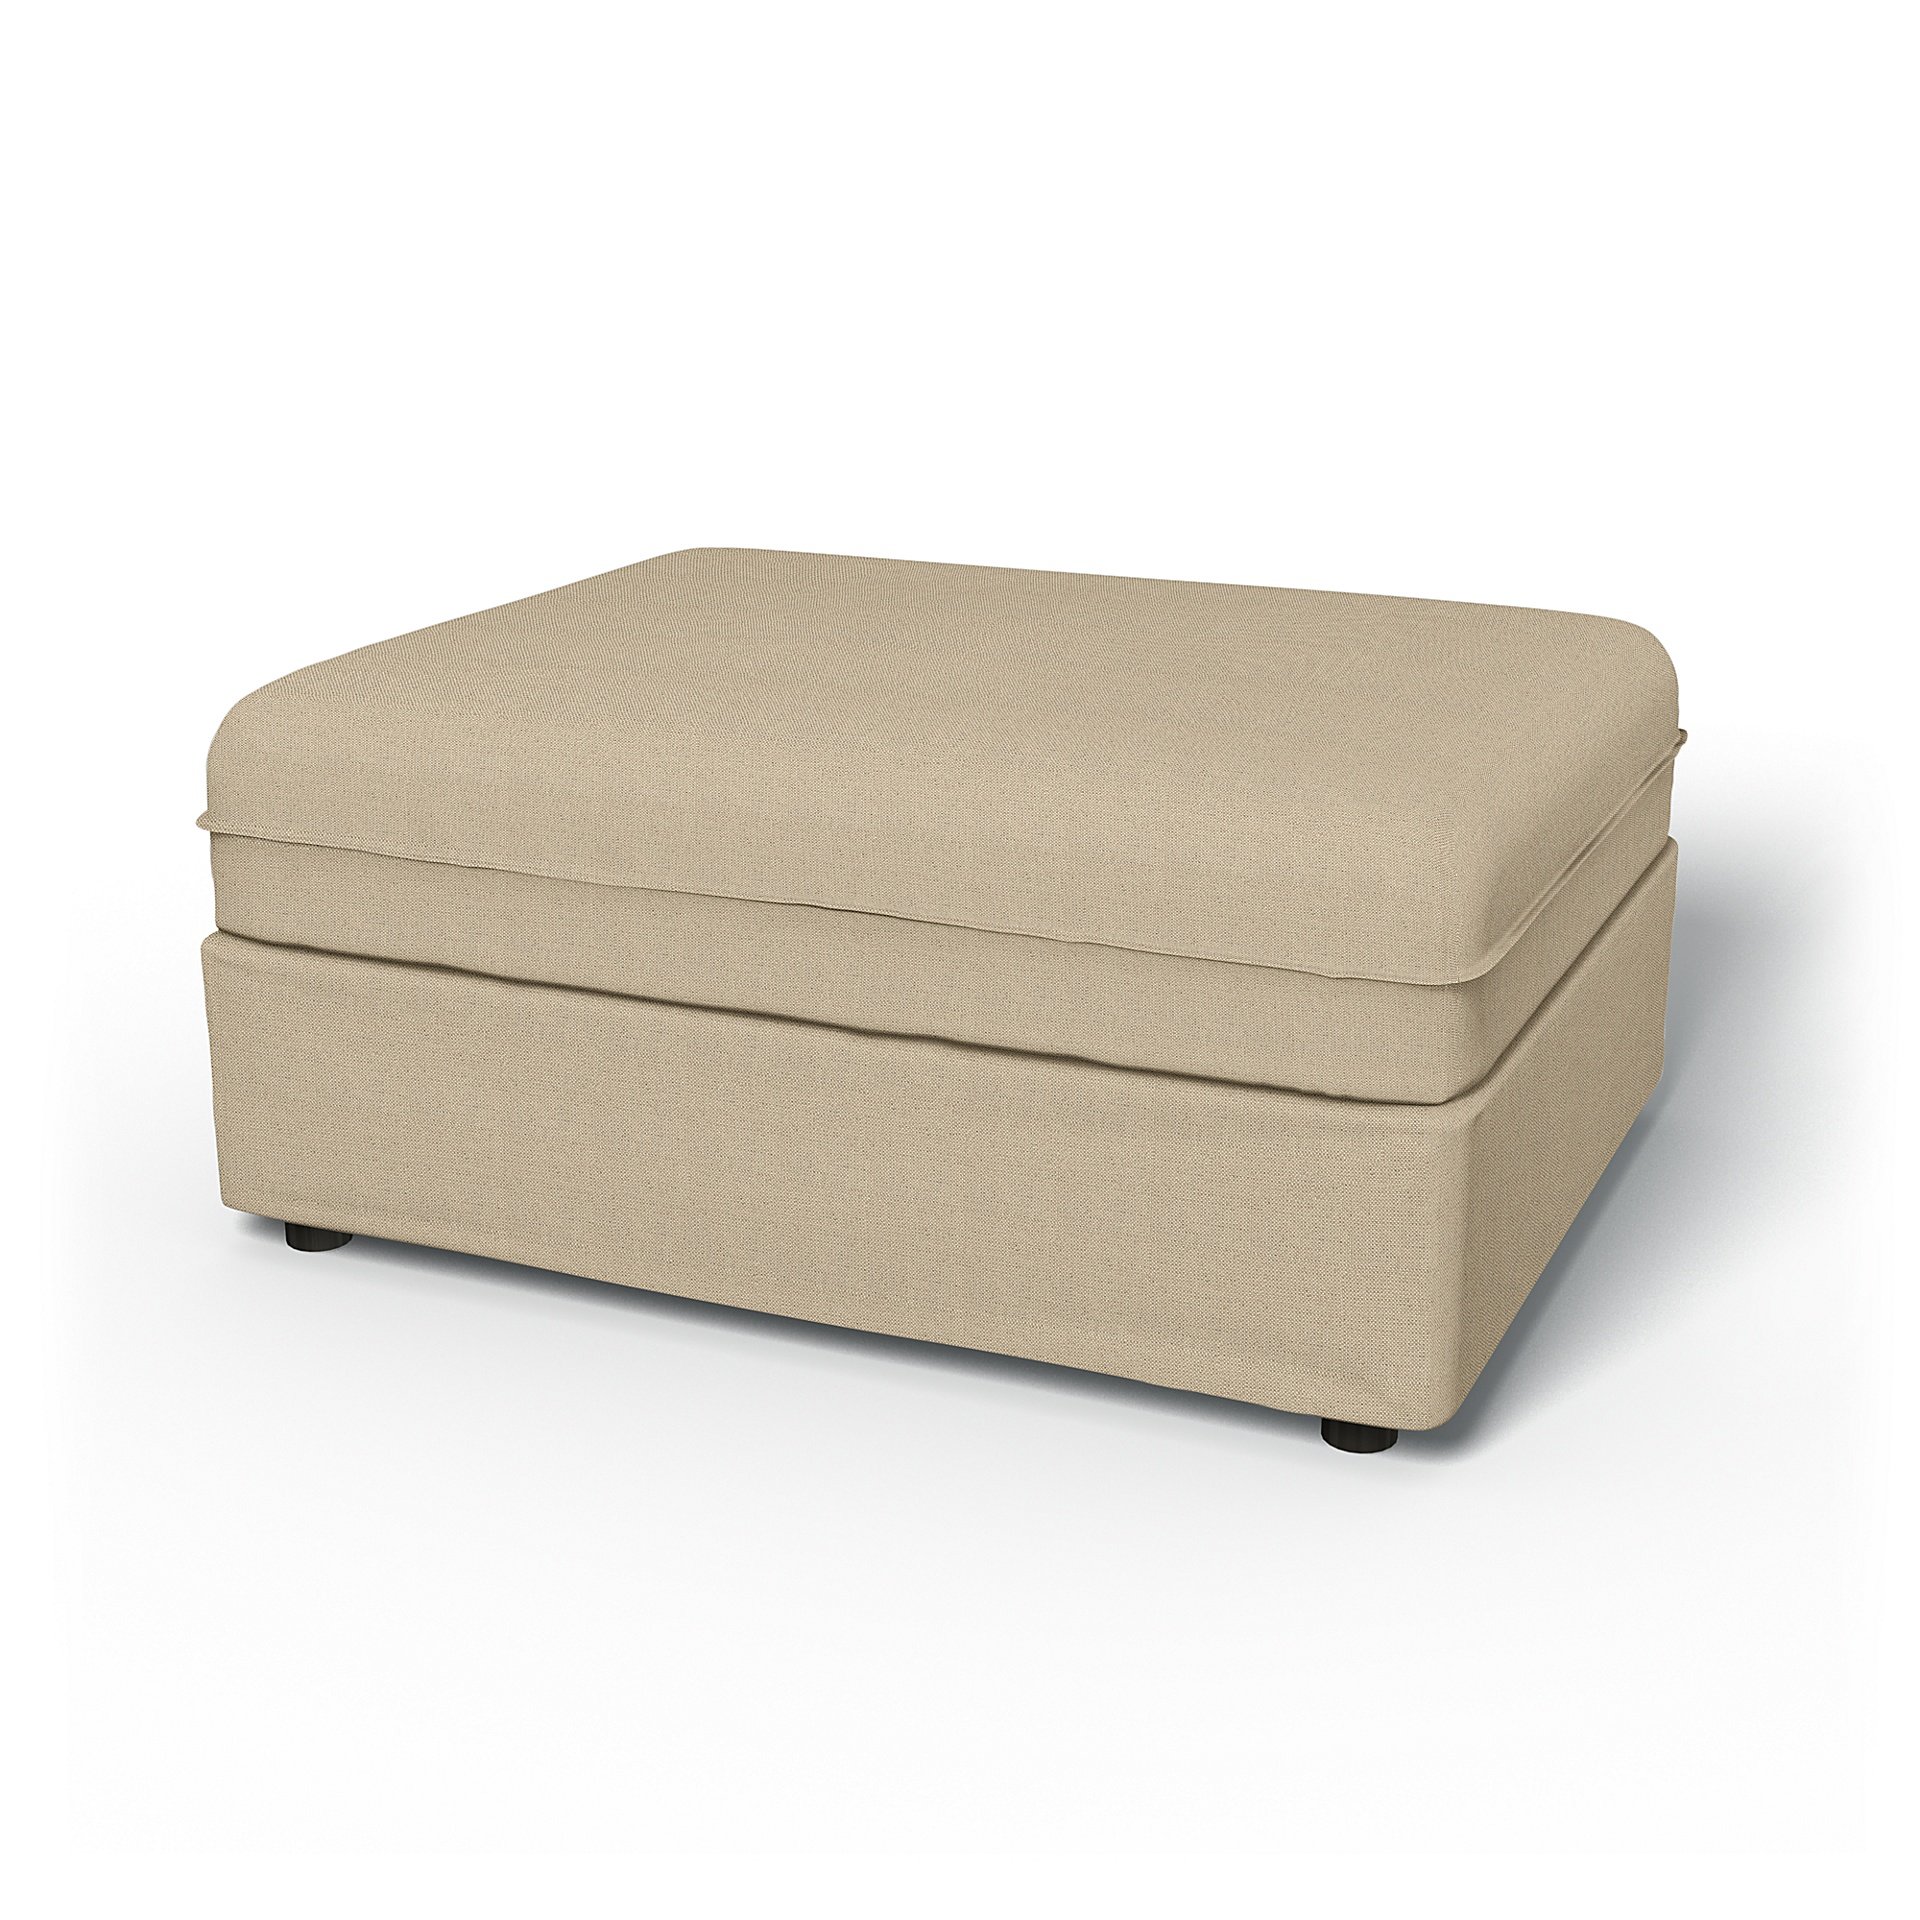 IKEA - Vallentuna Seat Module Cover 100x80cm 39x32in, Unbleached, Linen - Bemz